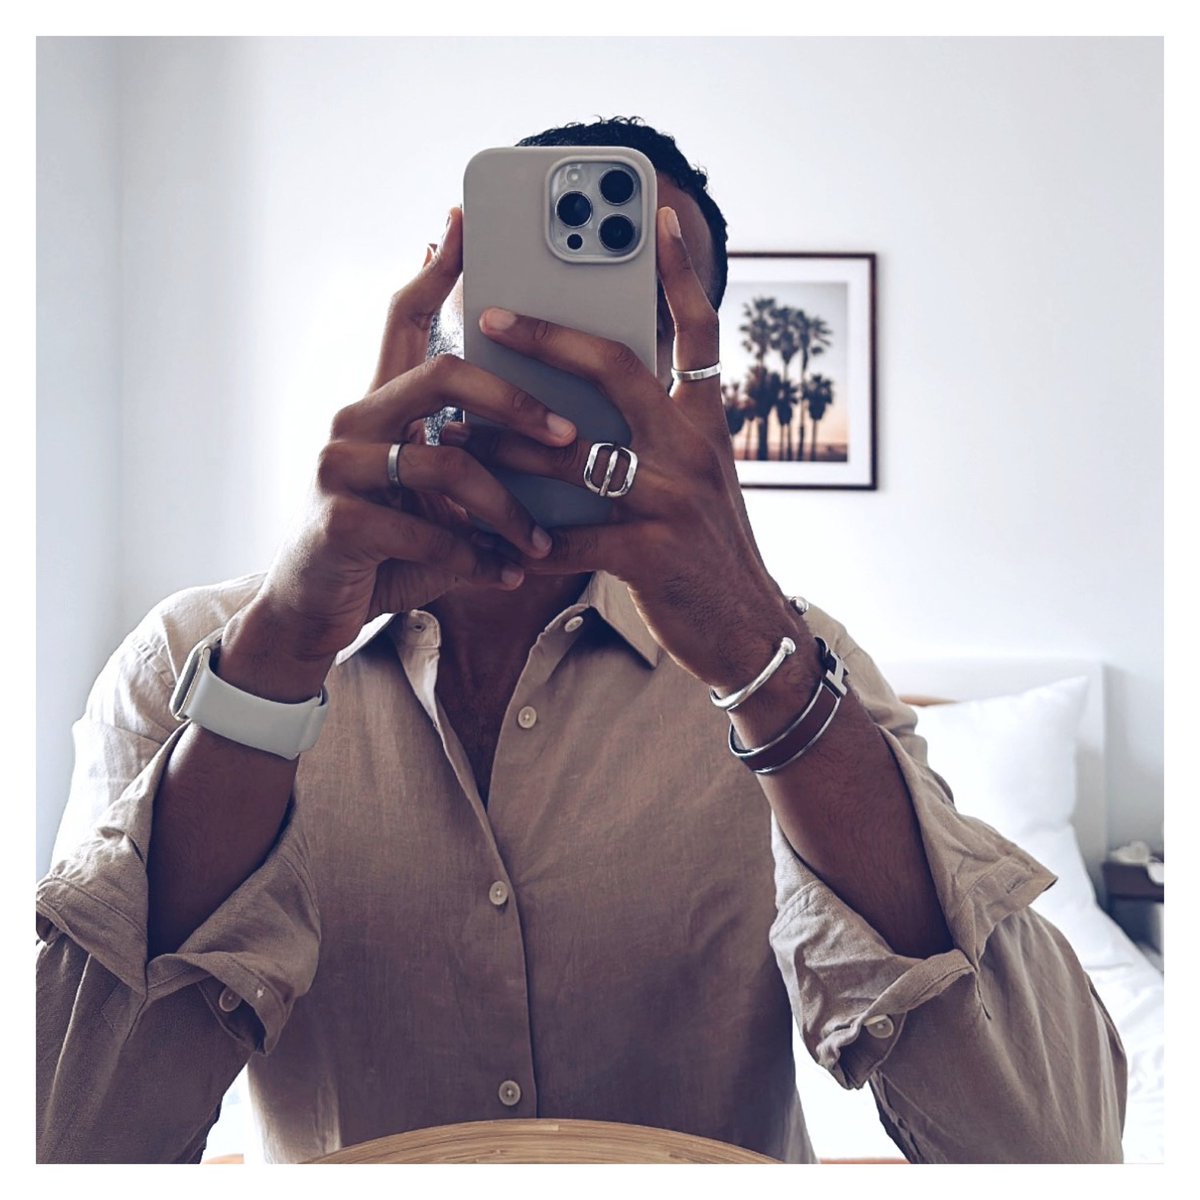 Hello Fall 🍂 • New York, USA 
#OutfitOfTheDay #OOTD #SandroParis #Sandro #SandroHomme #APC #APCparis #Jewelry #MenJewelry #Bracelet #Ring #Hermes #Apple #AppleWatch #iPhone #Fall #FallTones 
#MixedRace #MixedMan #PanAfrican